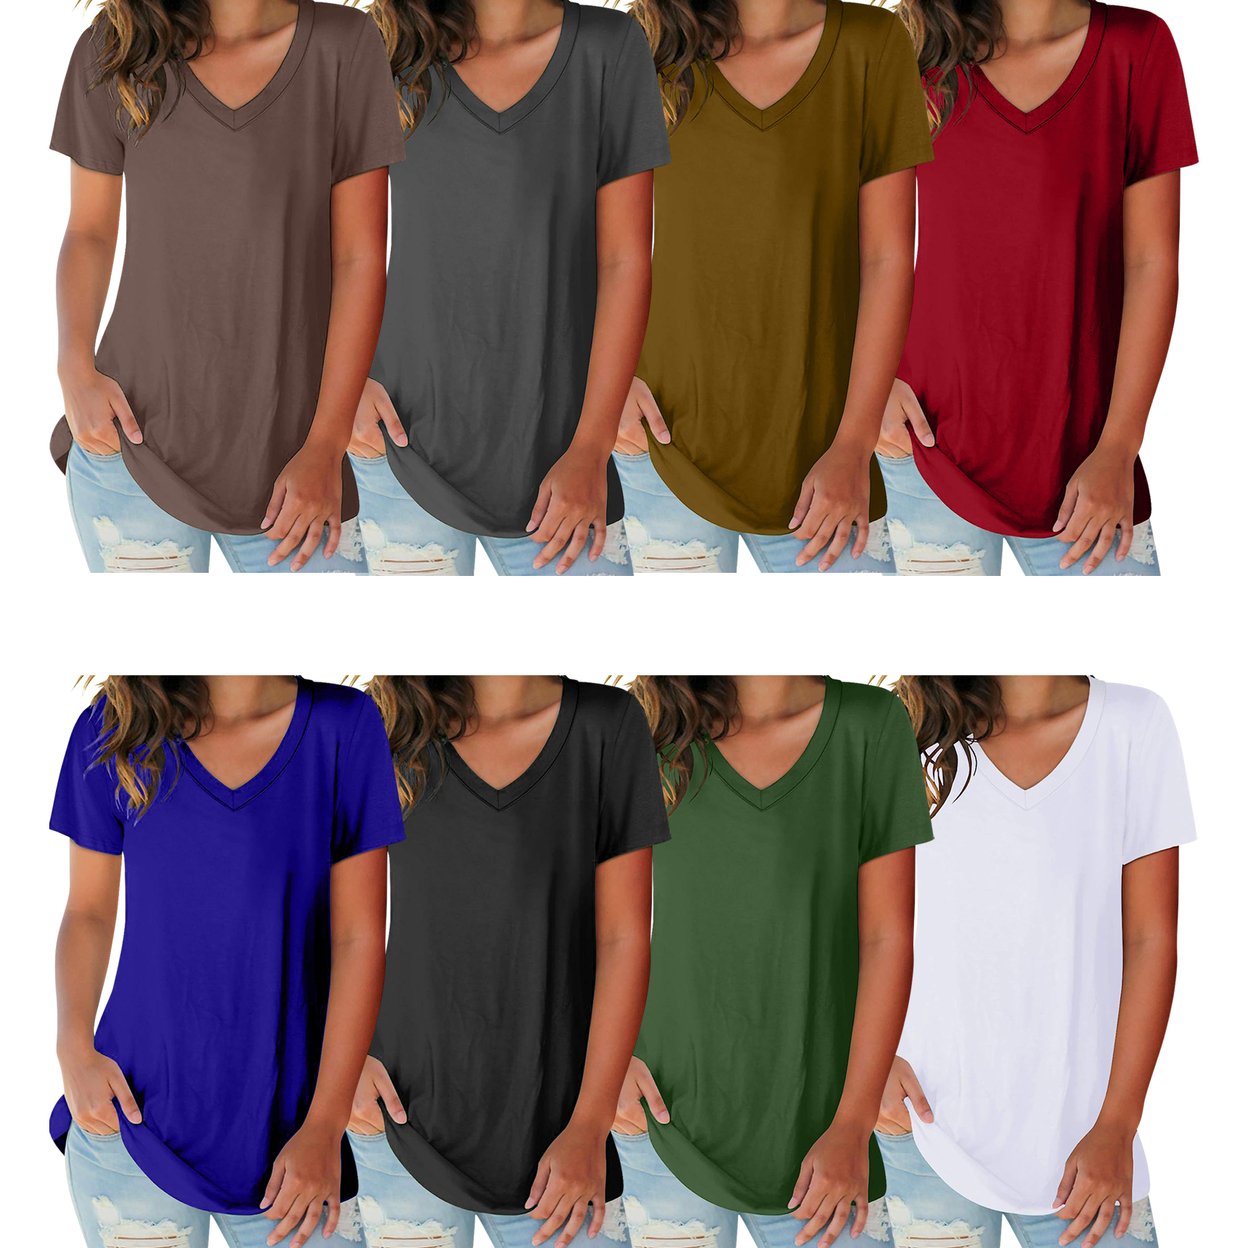 2-Pack: Women's Ultra Soft Smooth Cotton Blend Basic V-Neck Short Sleeve Shirts - Grey & Brown, Large